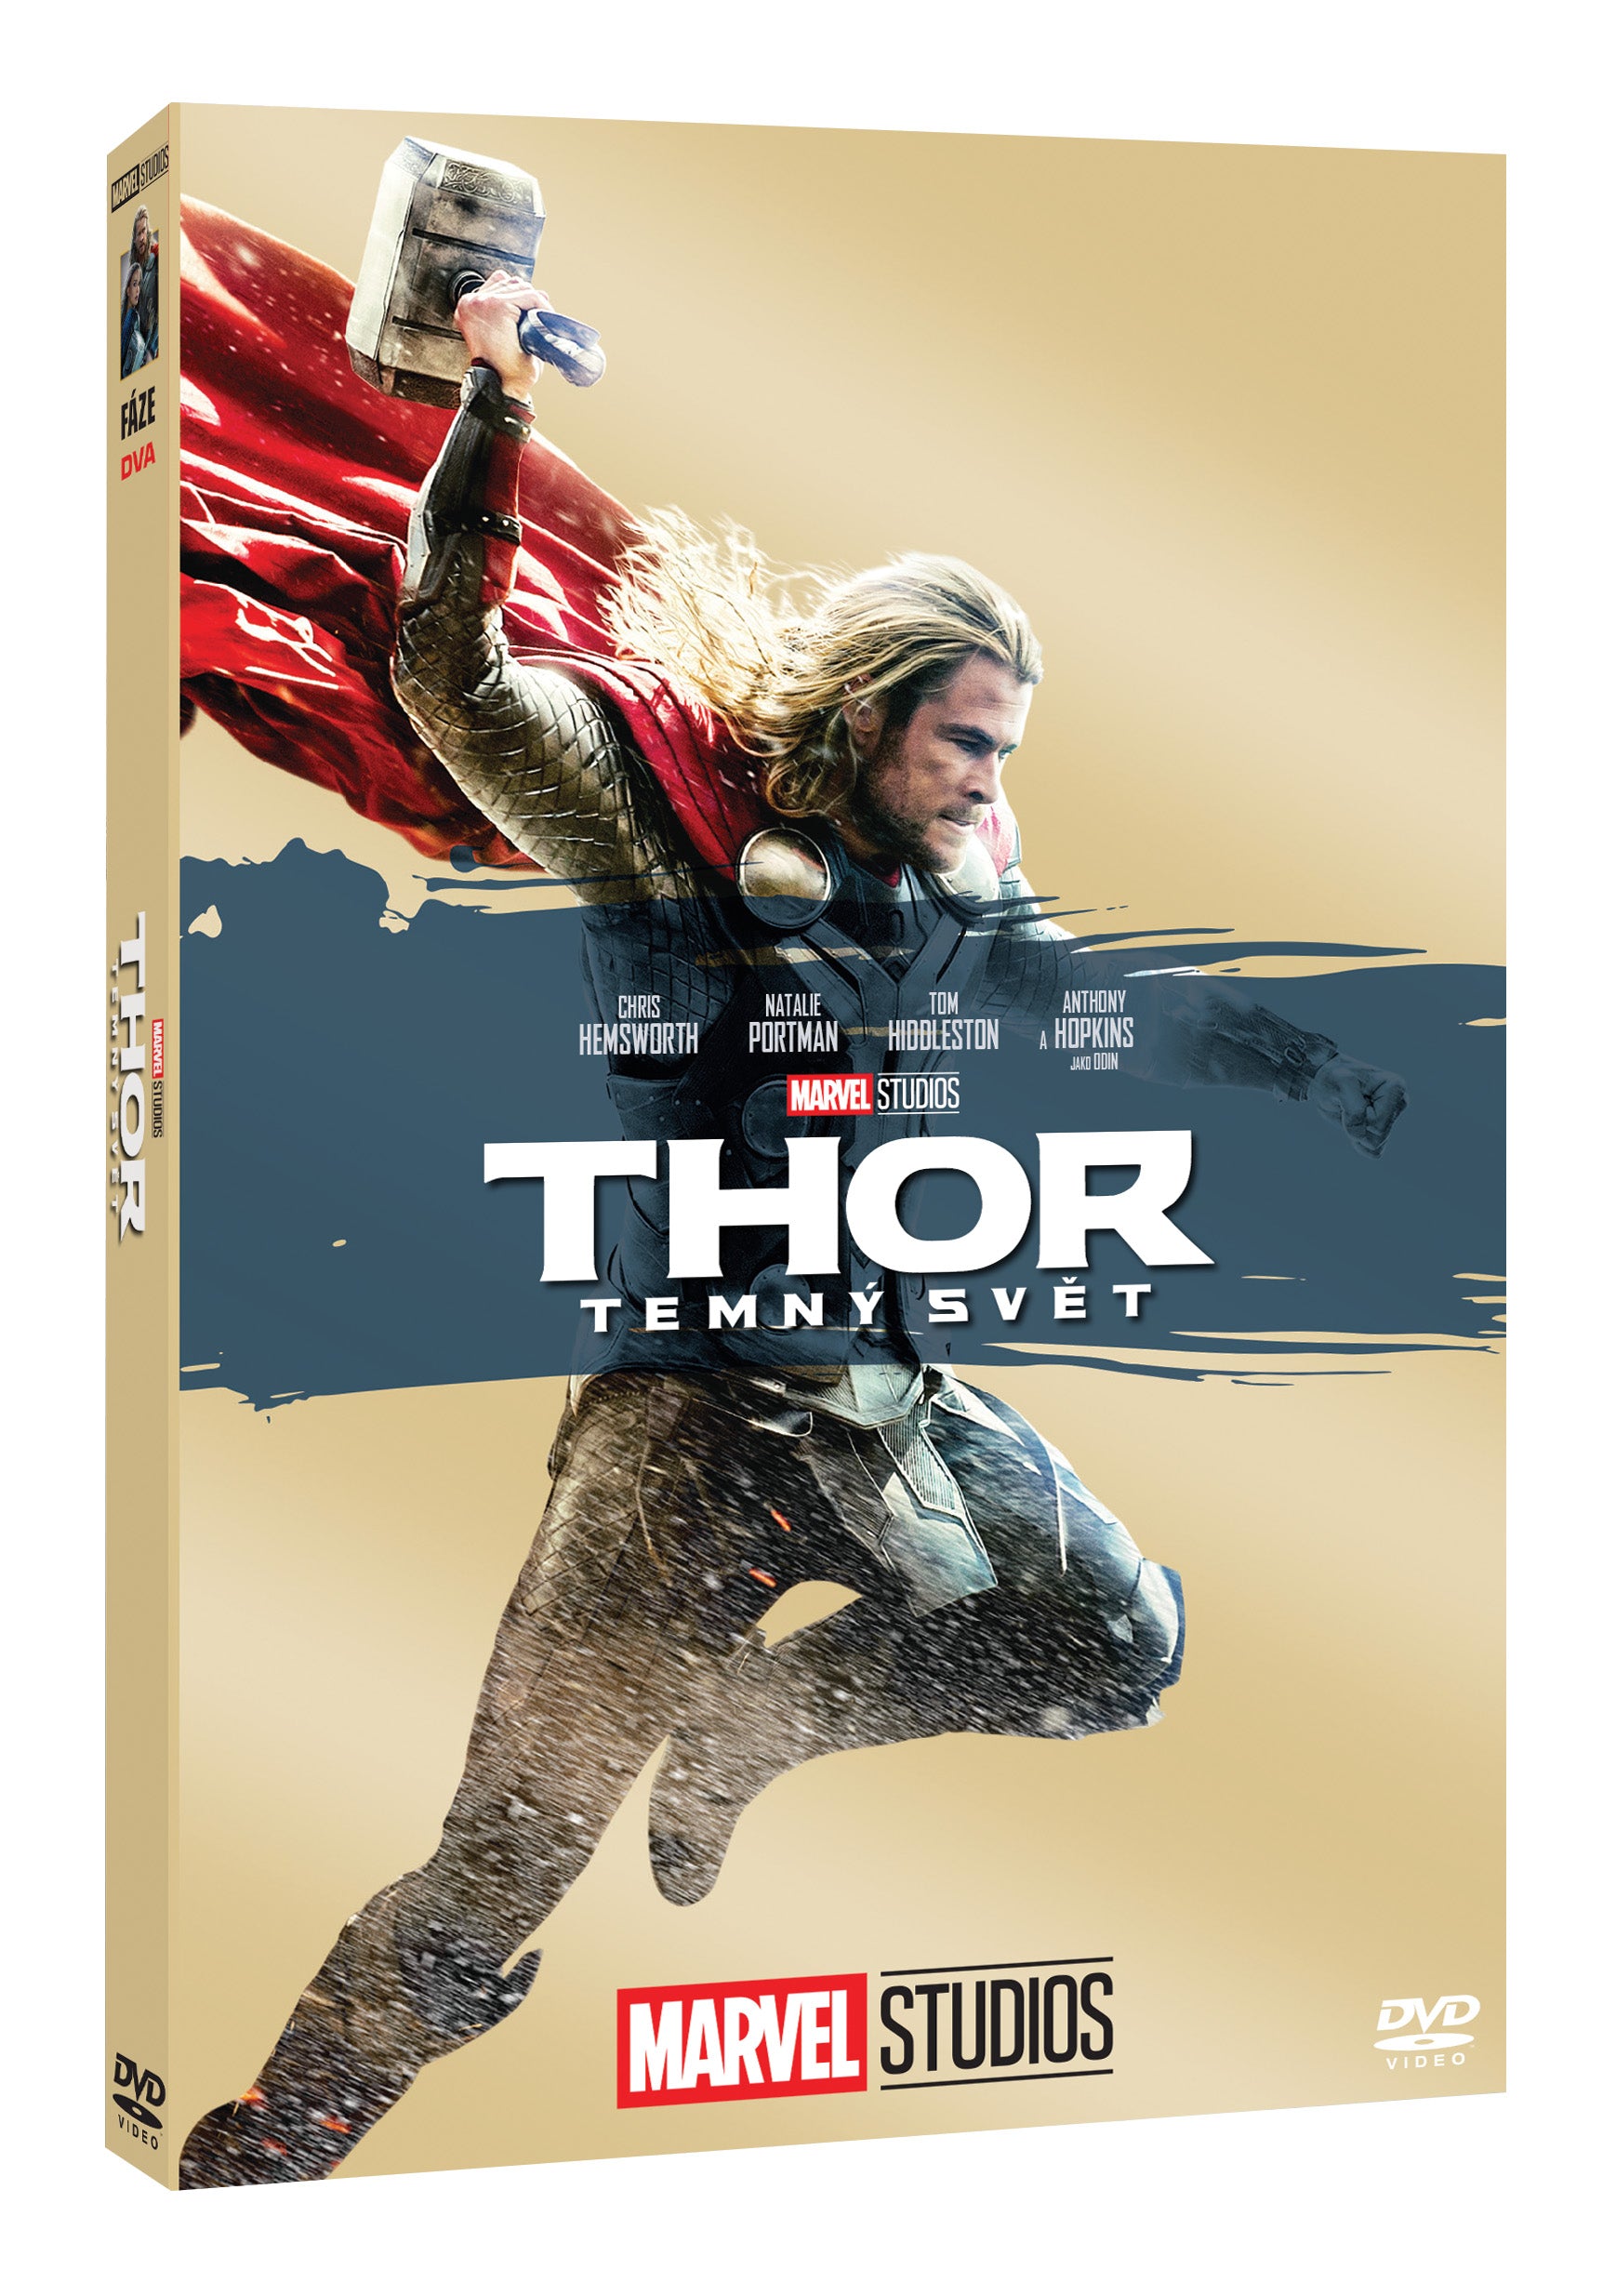 Thor: Temny svet DVD - Edice Marvel 10 let / Thor: The Dark World